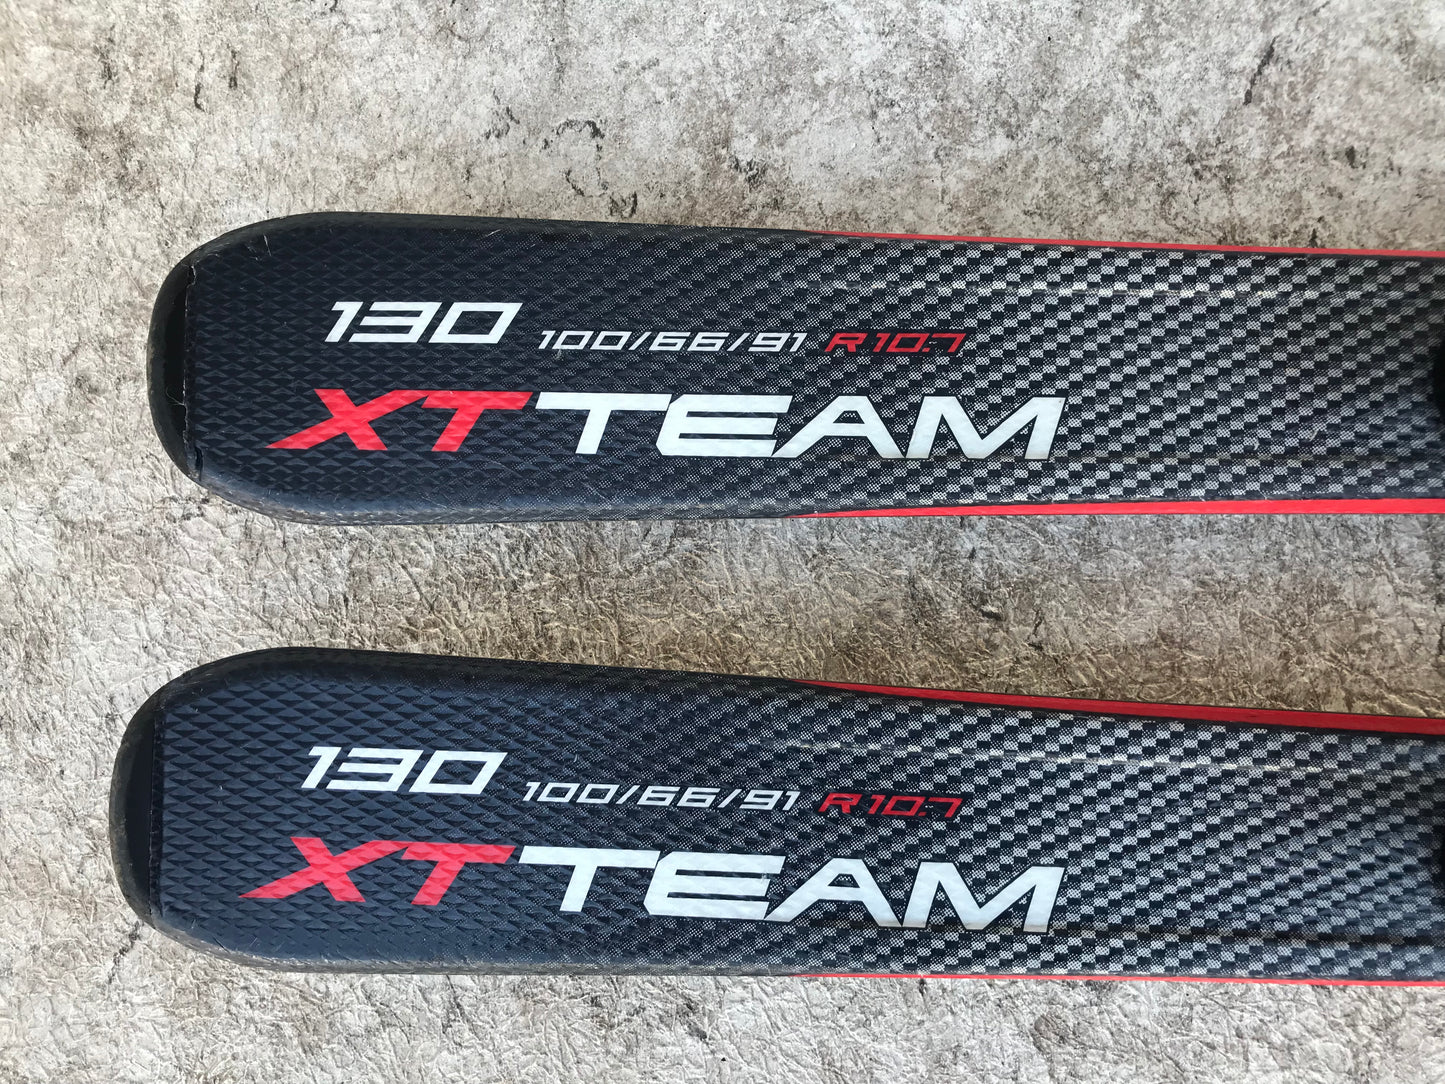 Ski 130 Tecno Pro X Team Red Black Parabolic With Bindings